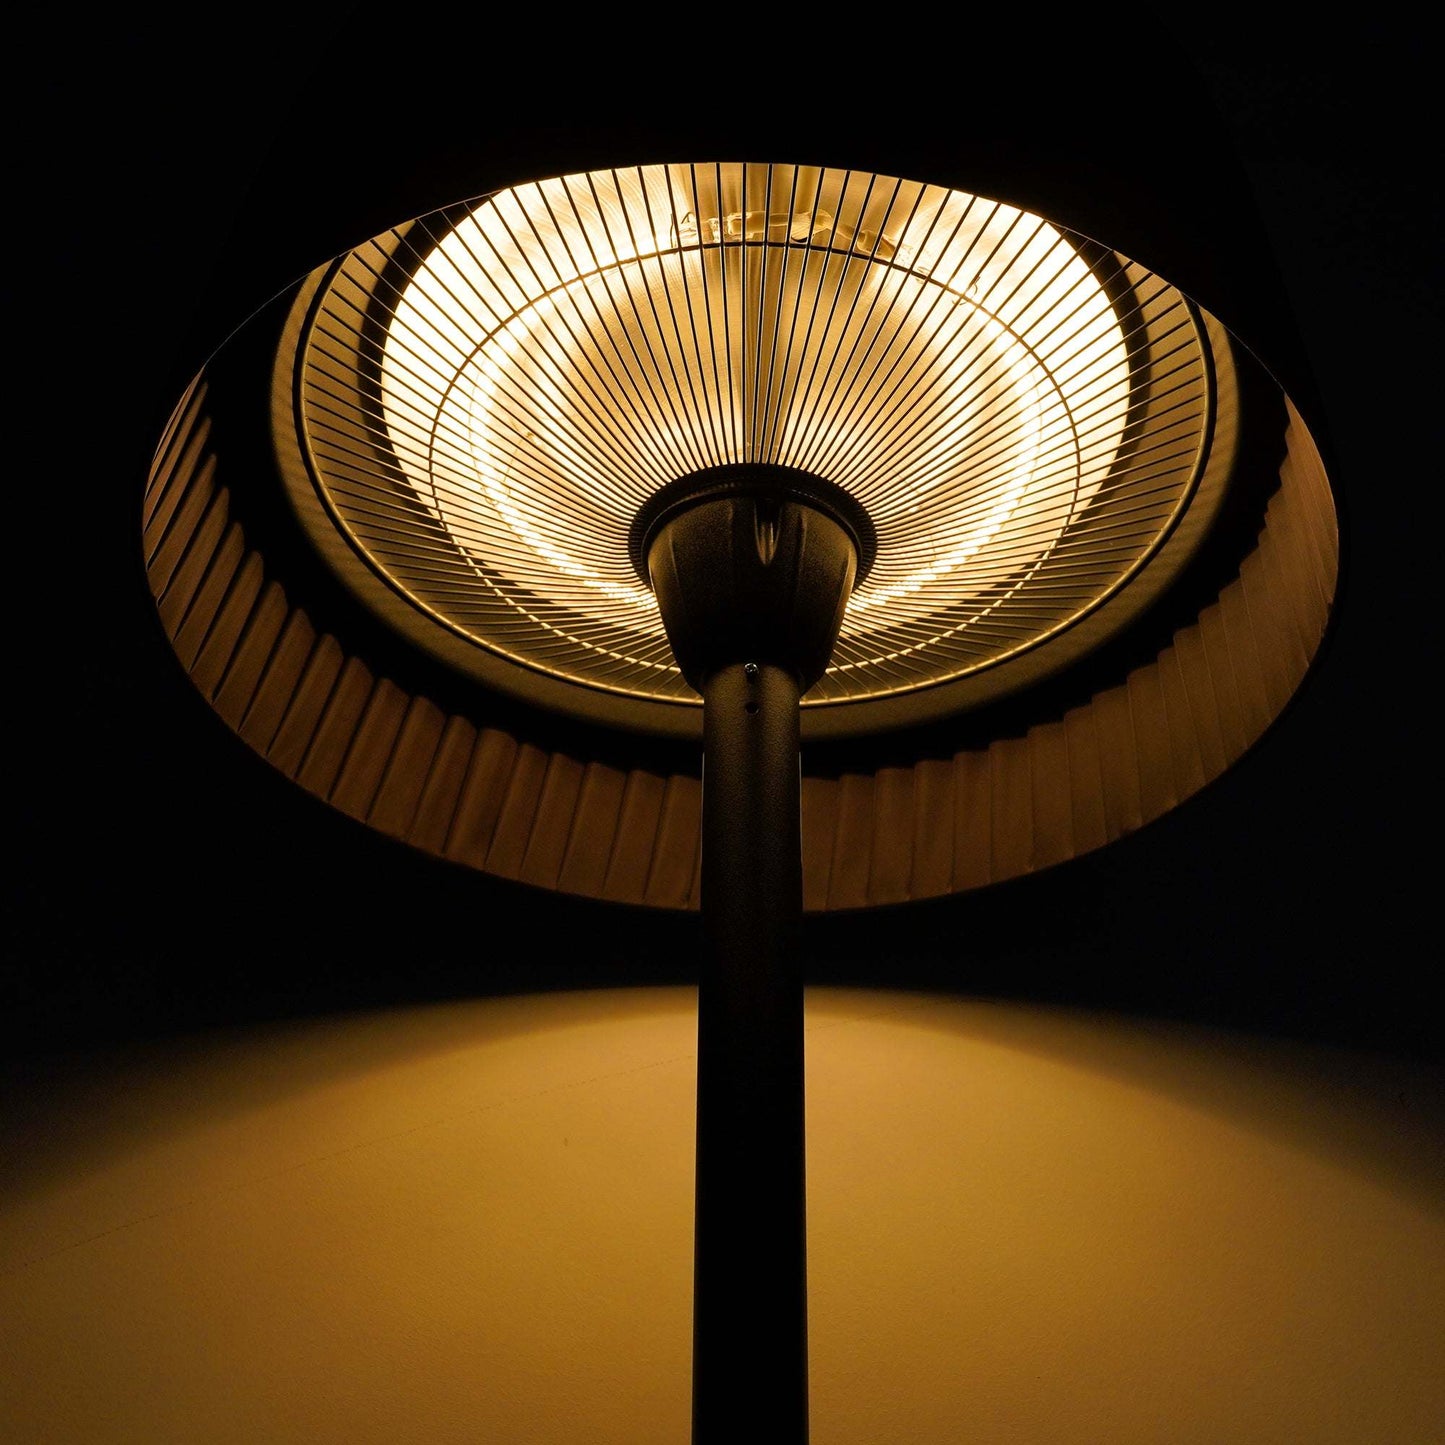 1500W Heater Floor Lamp